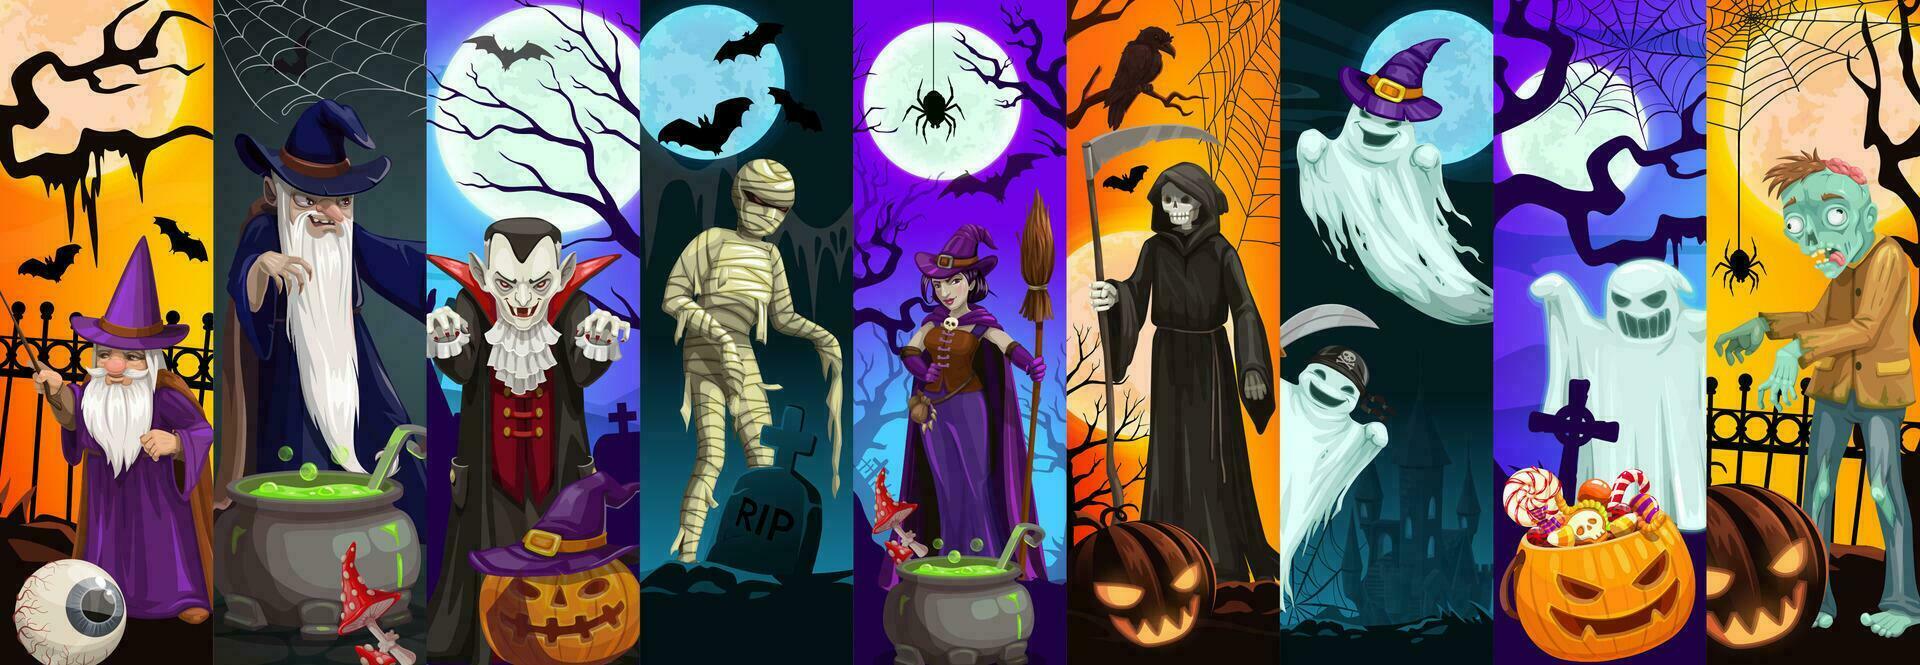 Cartoon Halloween scary monsters characters vector